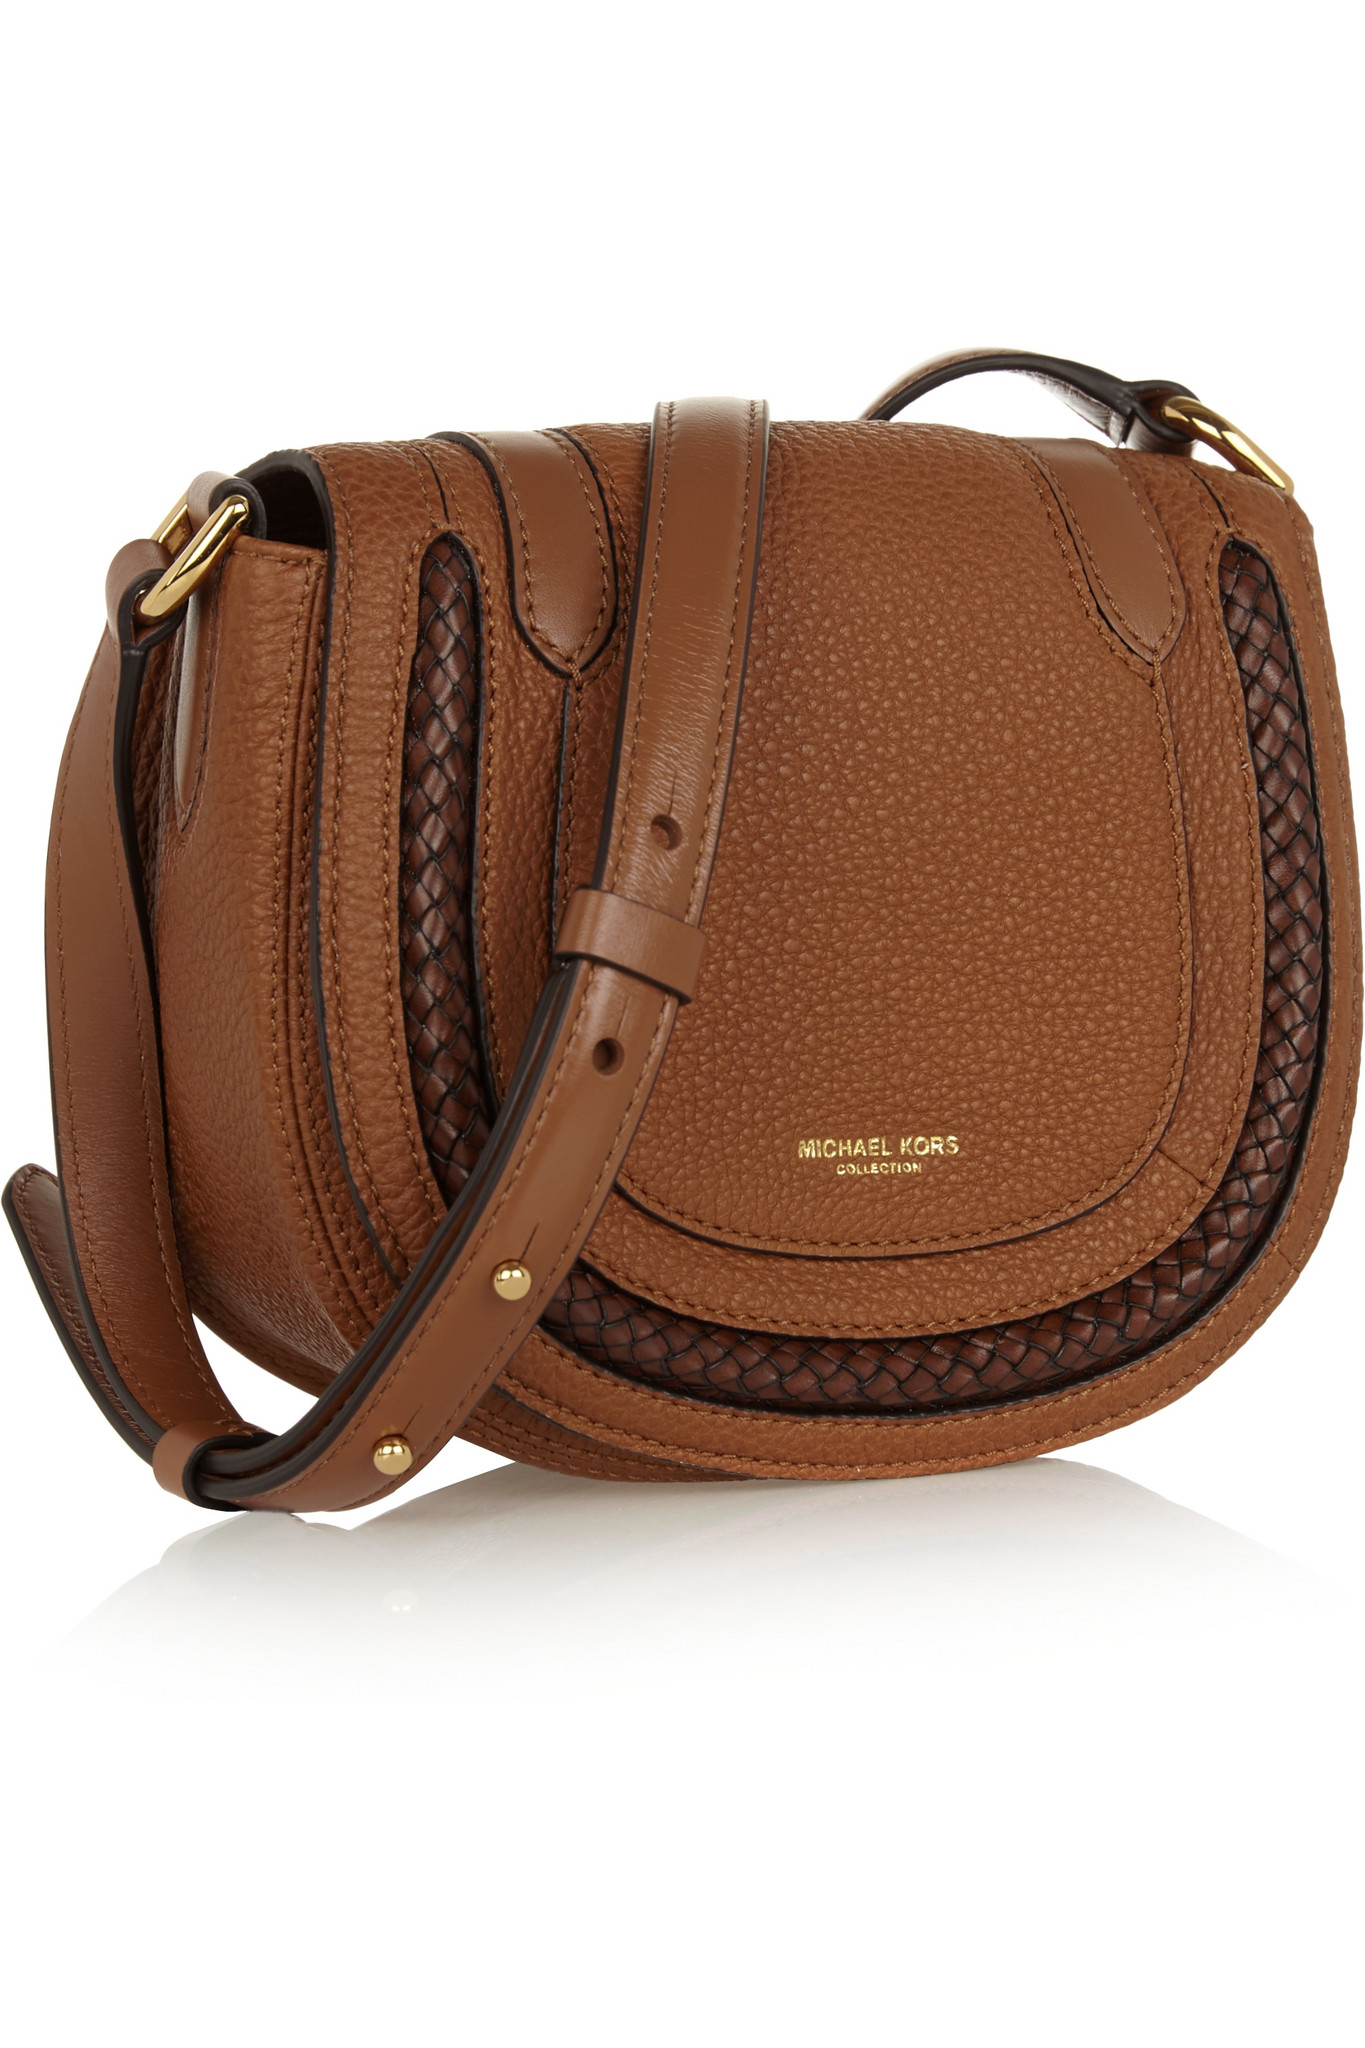 Michael Kors Skorpios Small Textured-leather Shoulder Bag in Tan (Brown) - Lyst